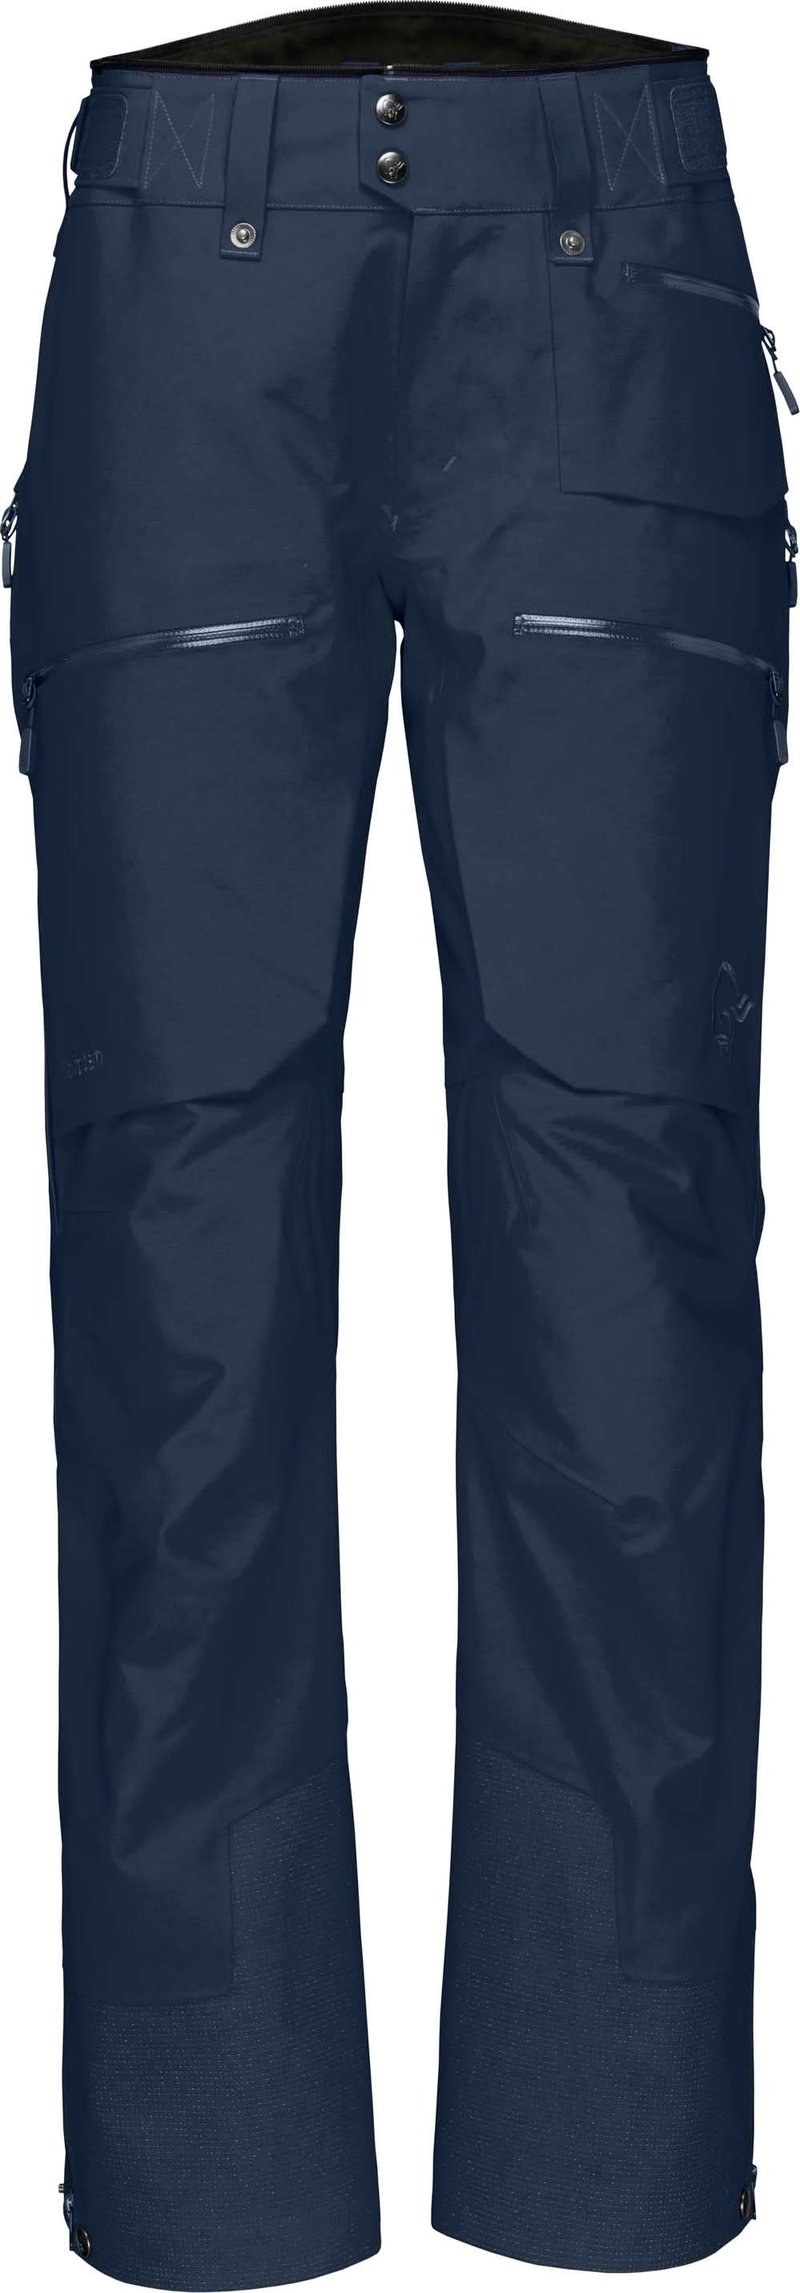 Women's Lofoten GORE-TEX Pro Pants Indigo Night | Buy Women's 